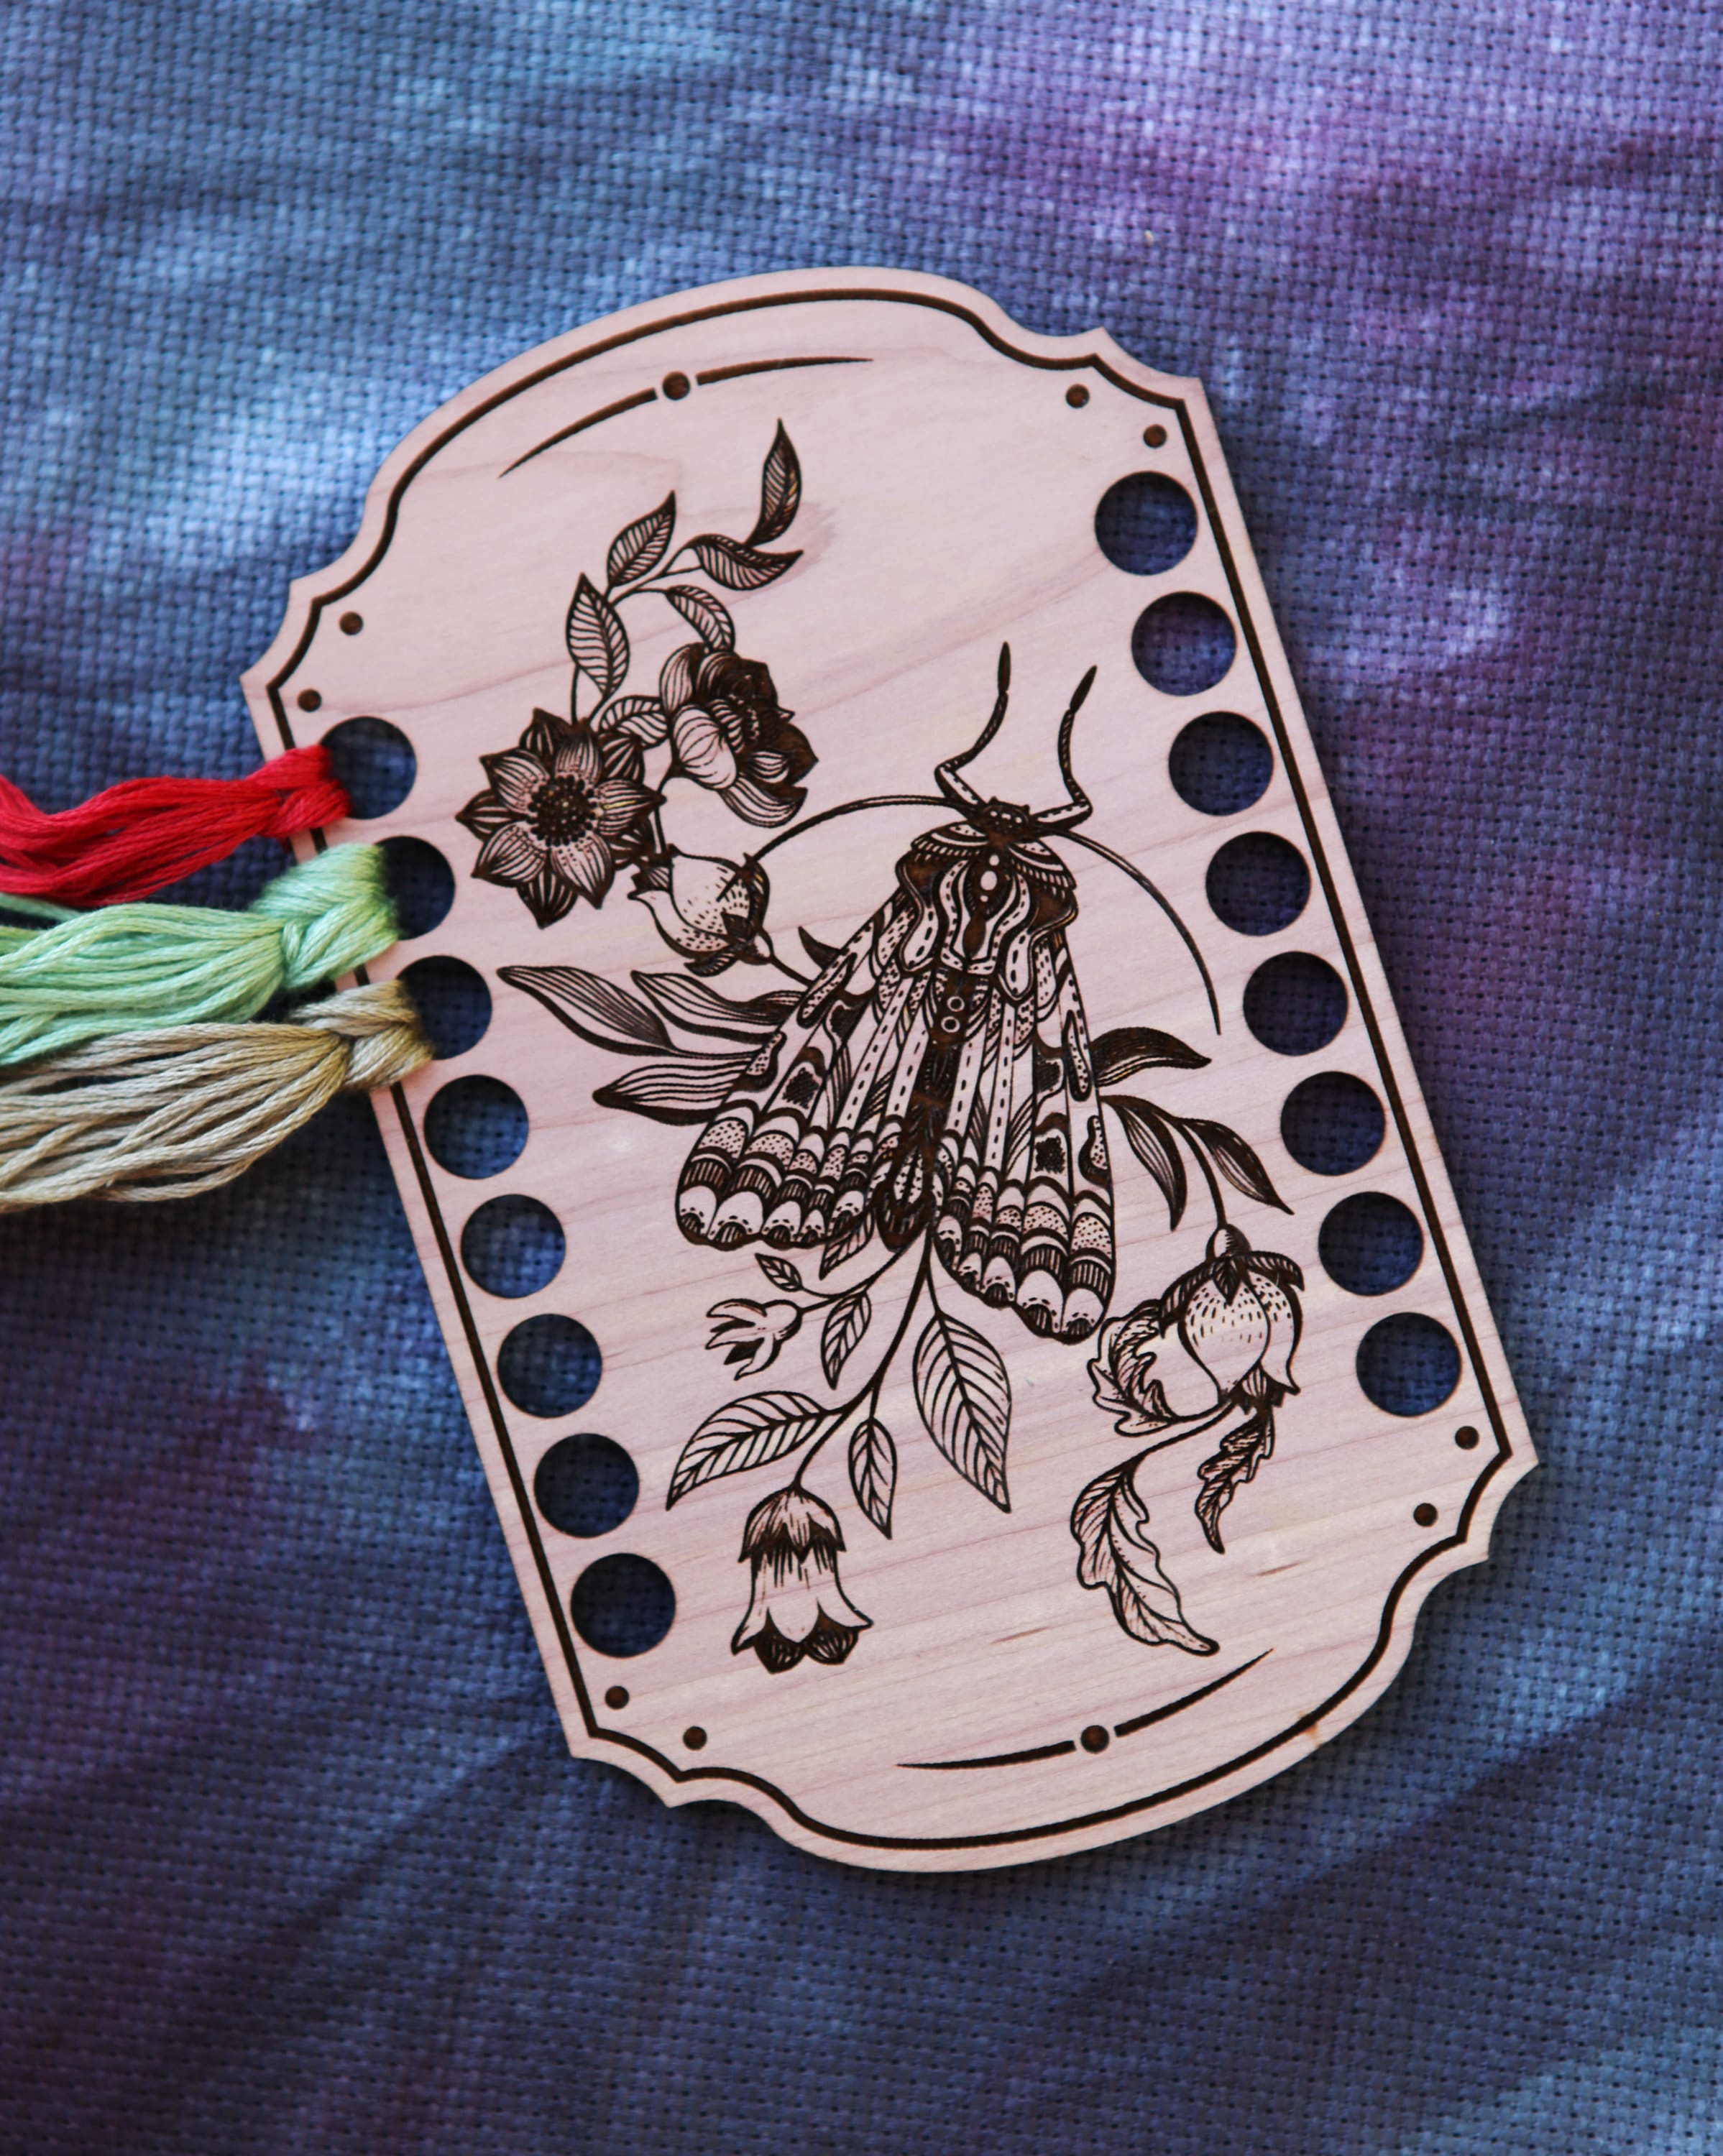 Embroidery Cross Stitch Floss Storage Organizer, Thread Holder, Cross  Stitch Embroidery Accessories, Thread Keeper, Stitcher Gifts 